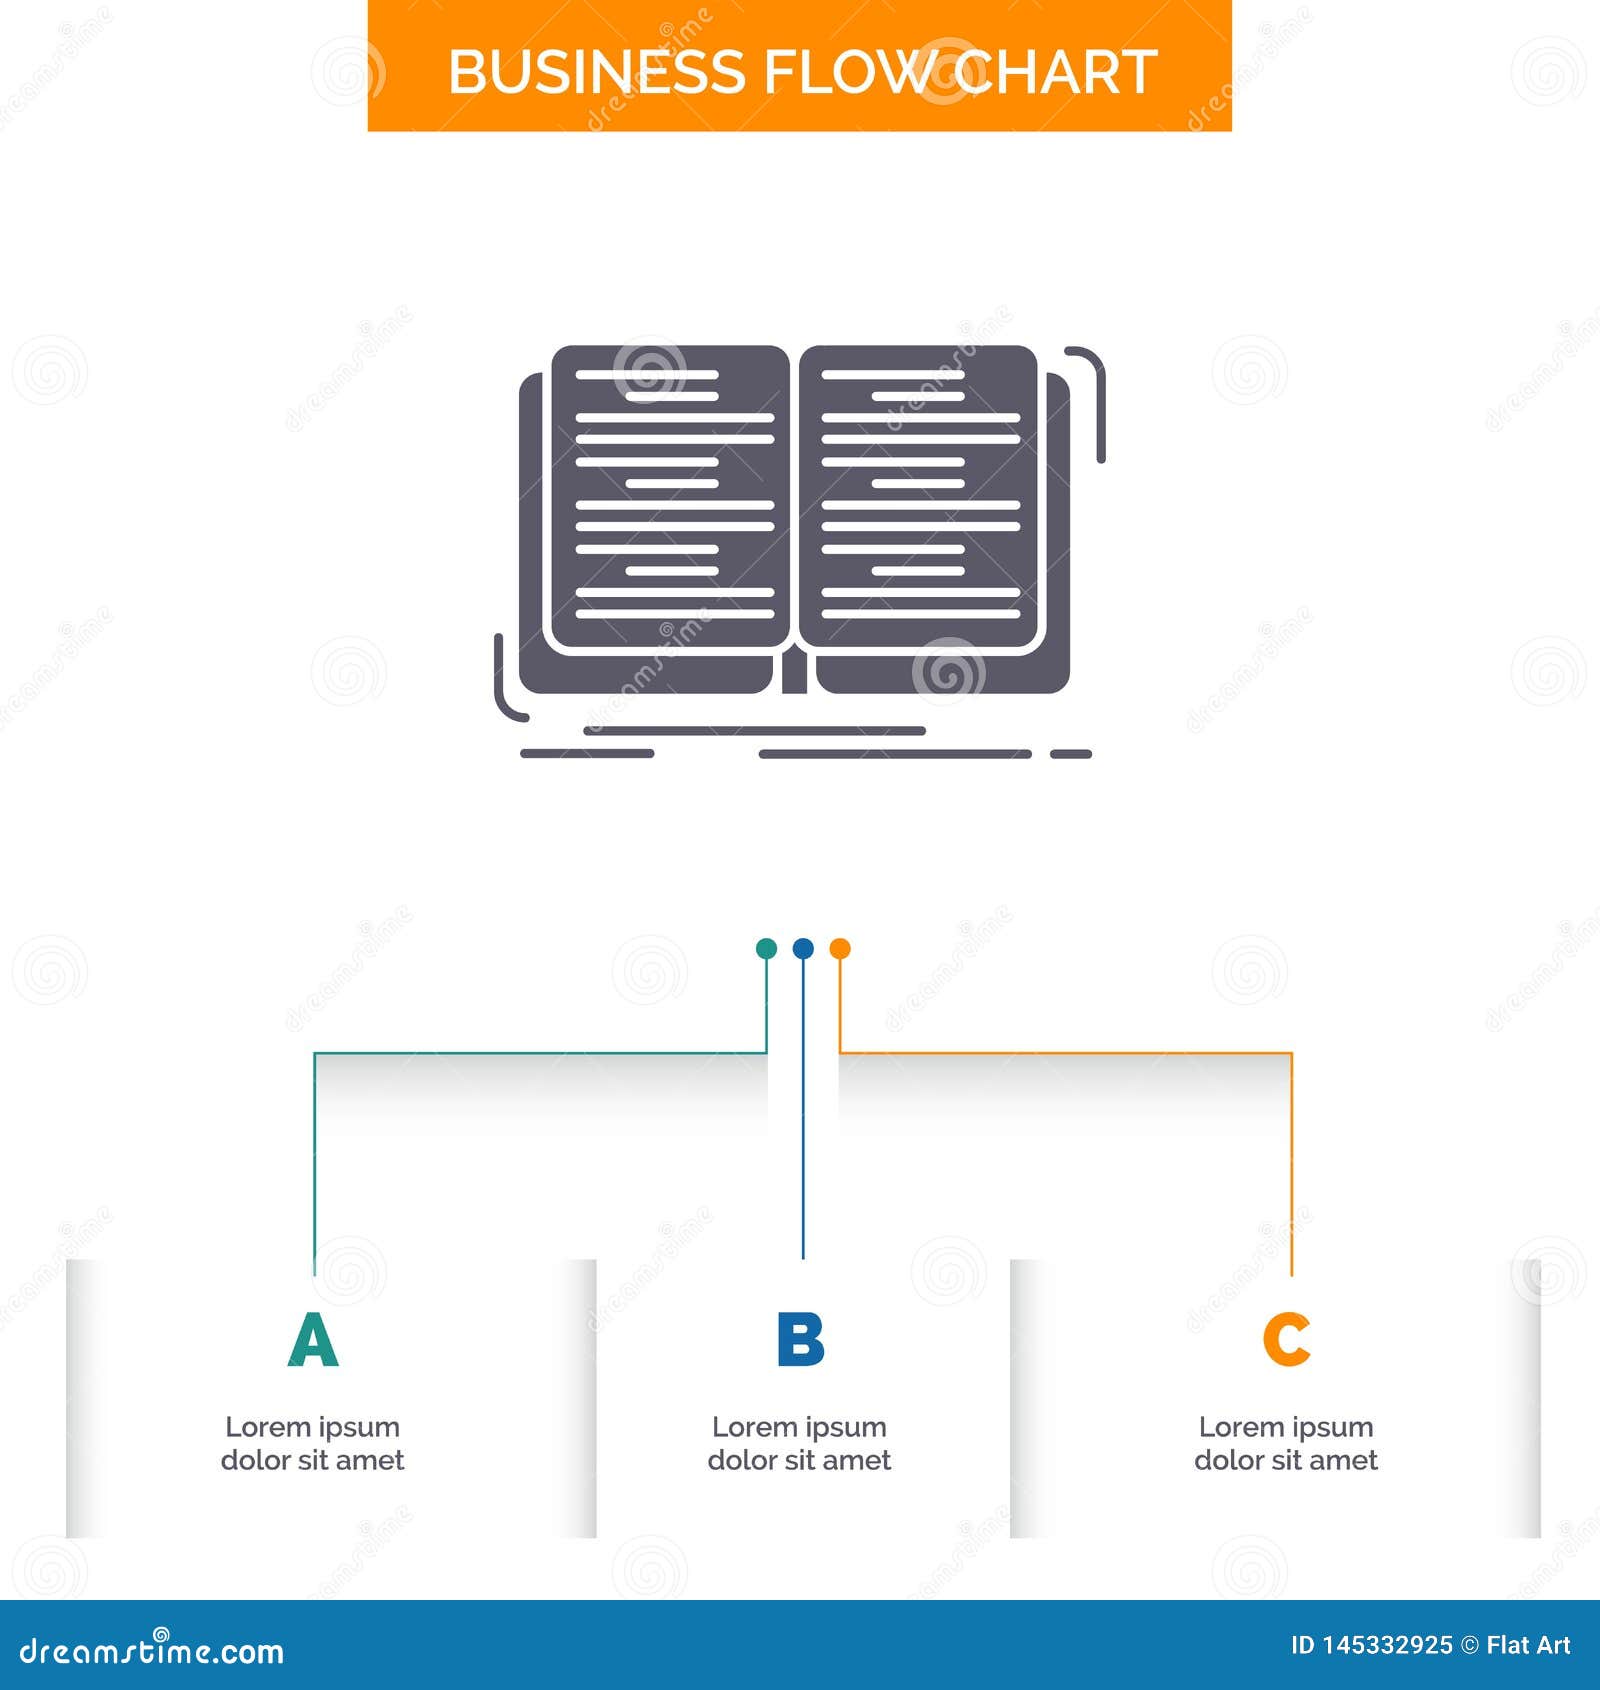 Study Flow Chart Template